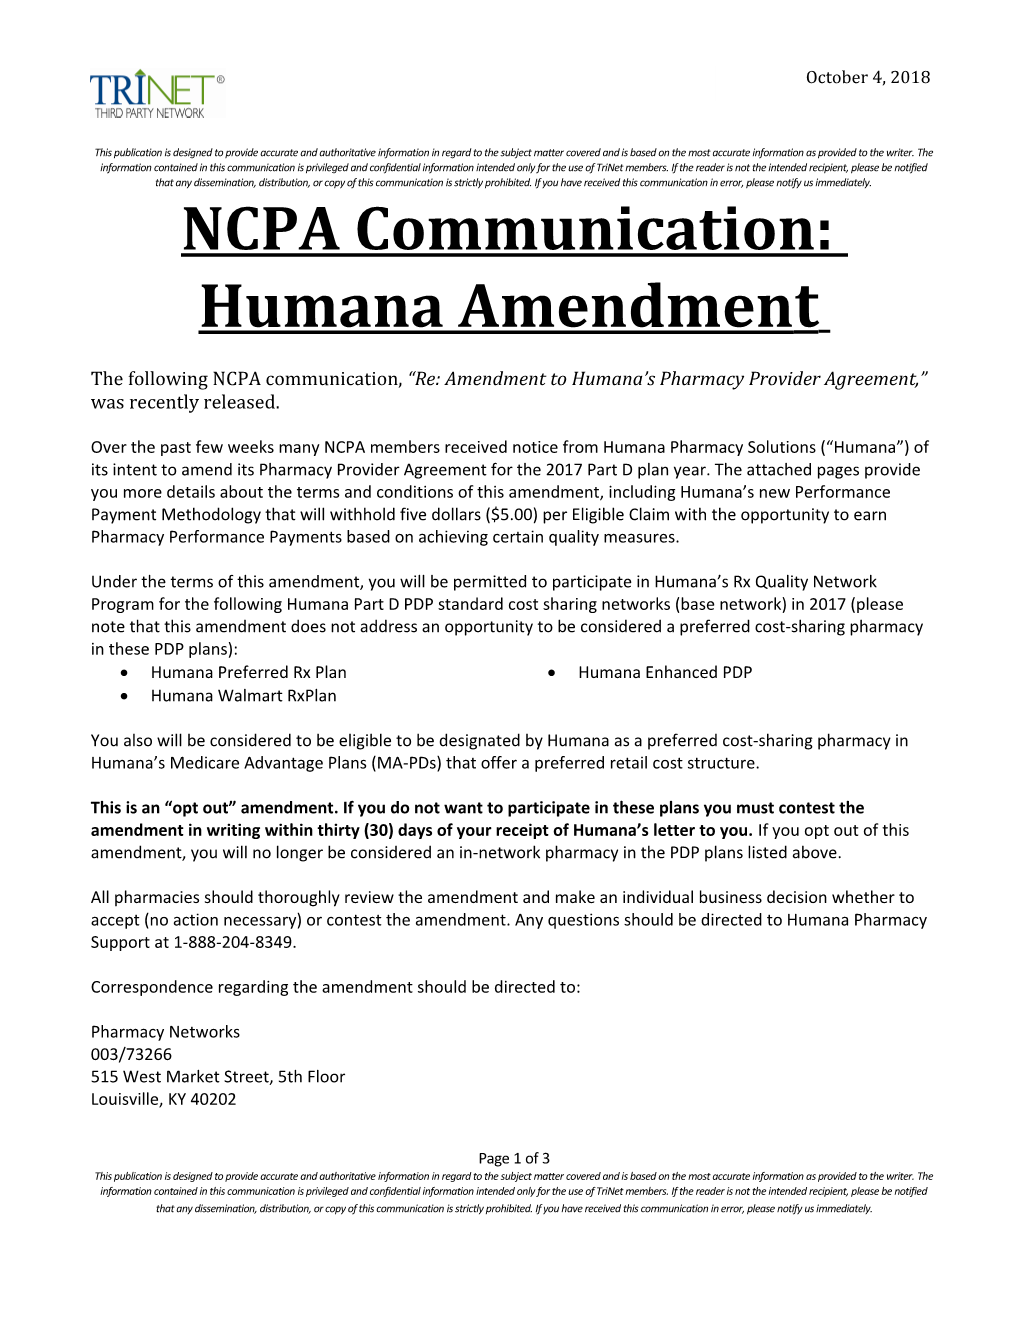 NCPA Communication